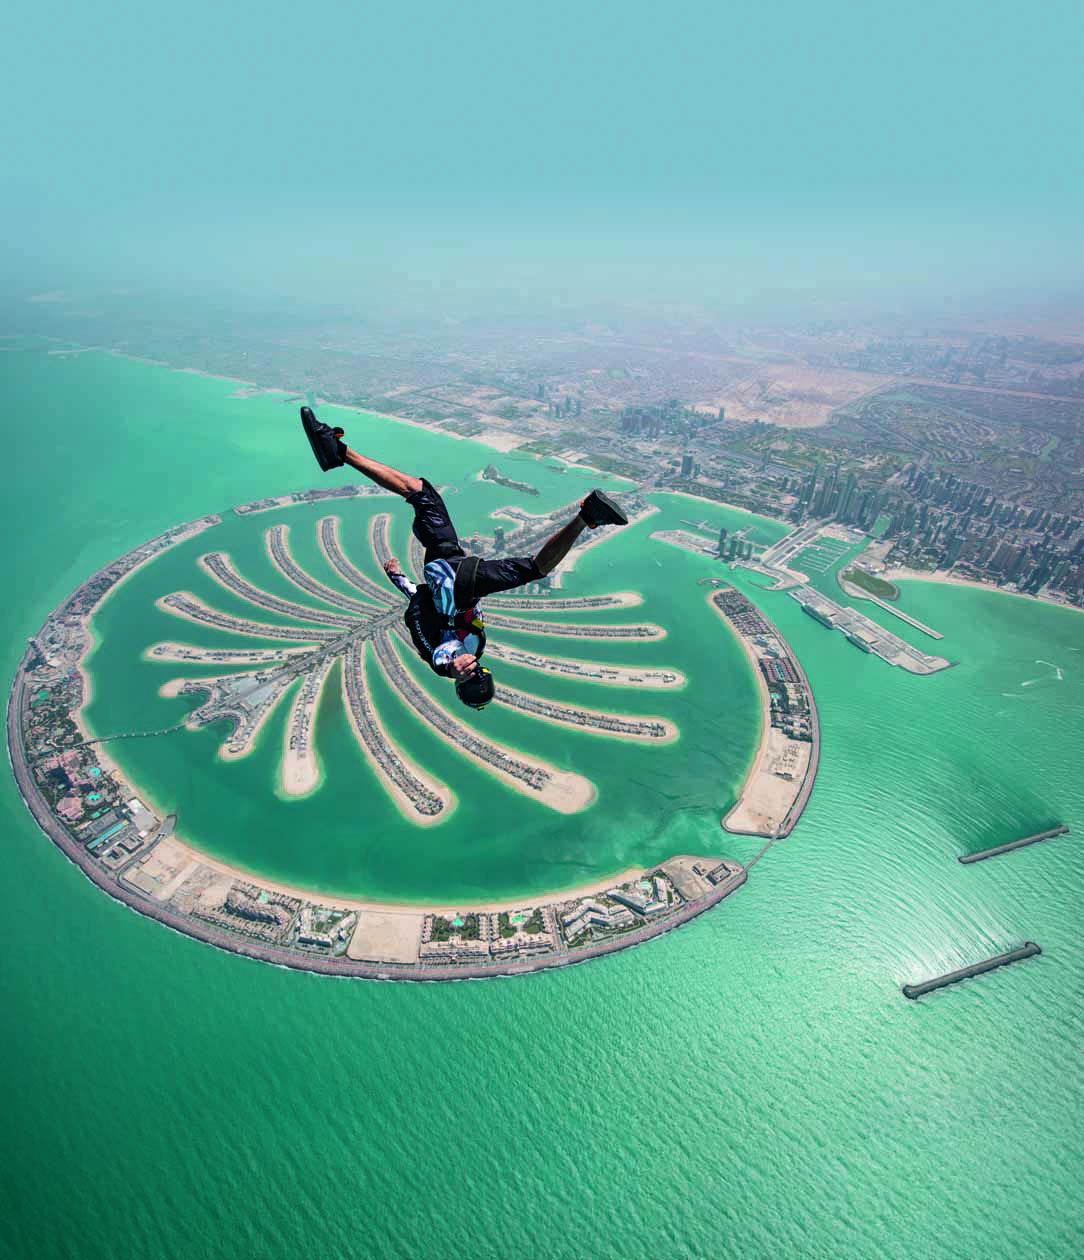 Sky Dive. Photo courtesy Ufficio Stampa Emirates / Copyright © Emirates Airlines / The Emirates Group